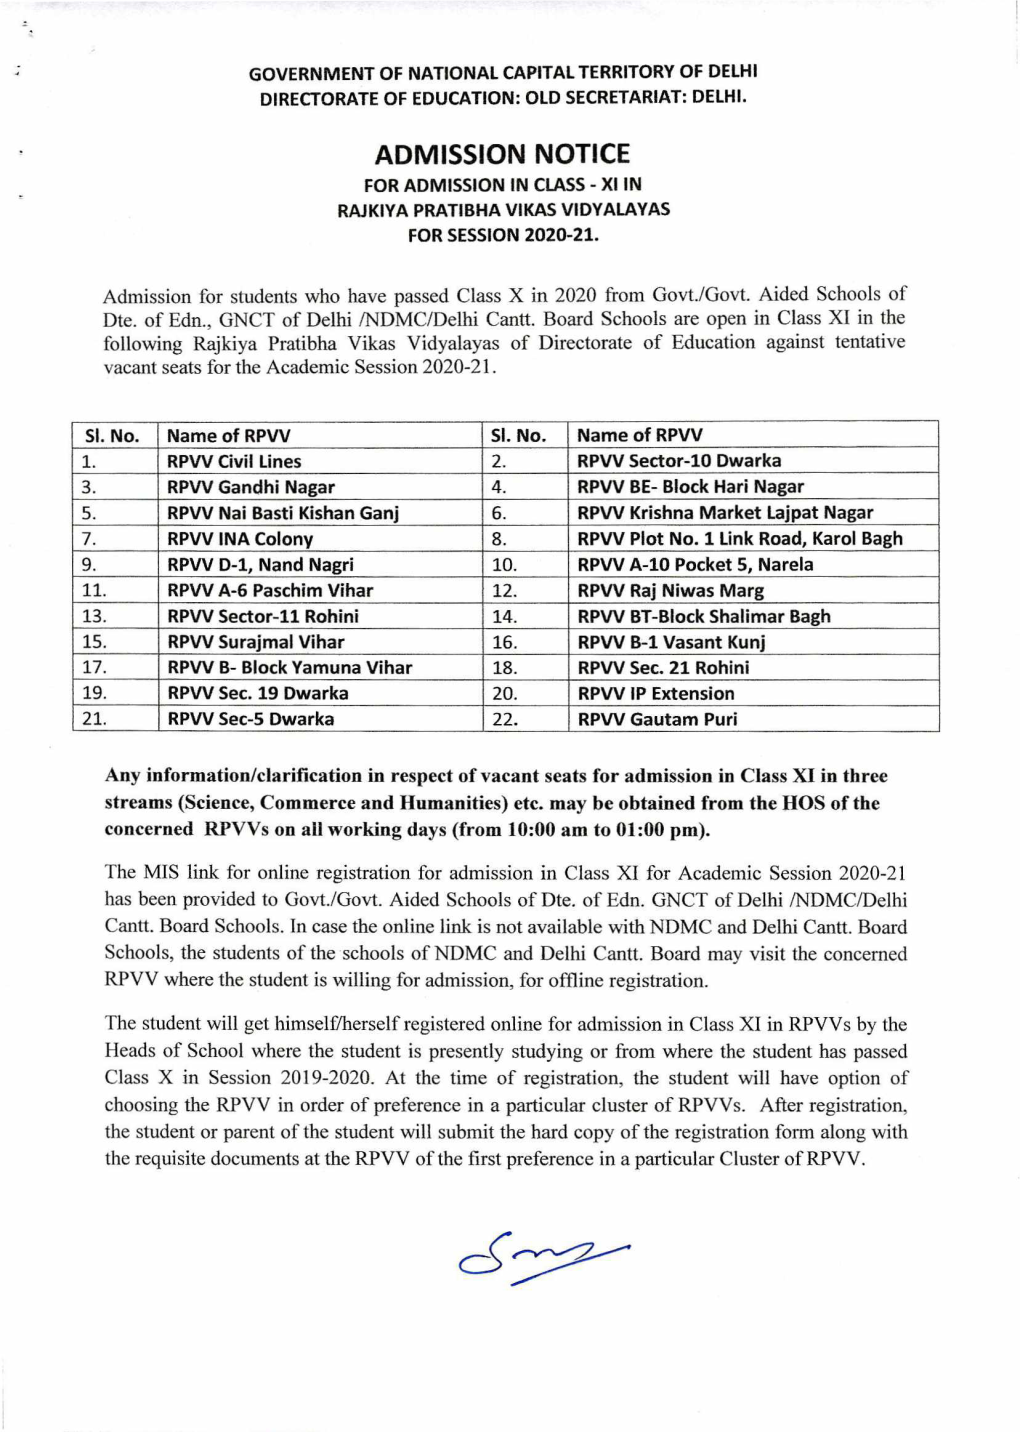 Admission Notice for Admission in Class - Xi in Rajkiya Pratibha Vikas Vidyalayas for Session 2020-21